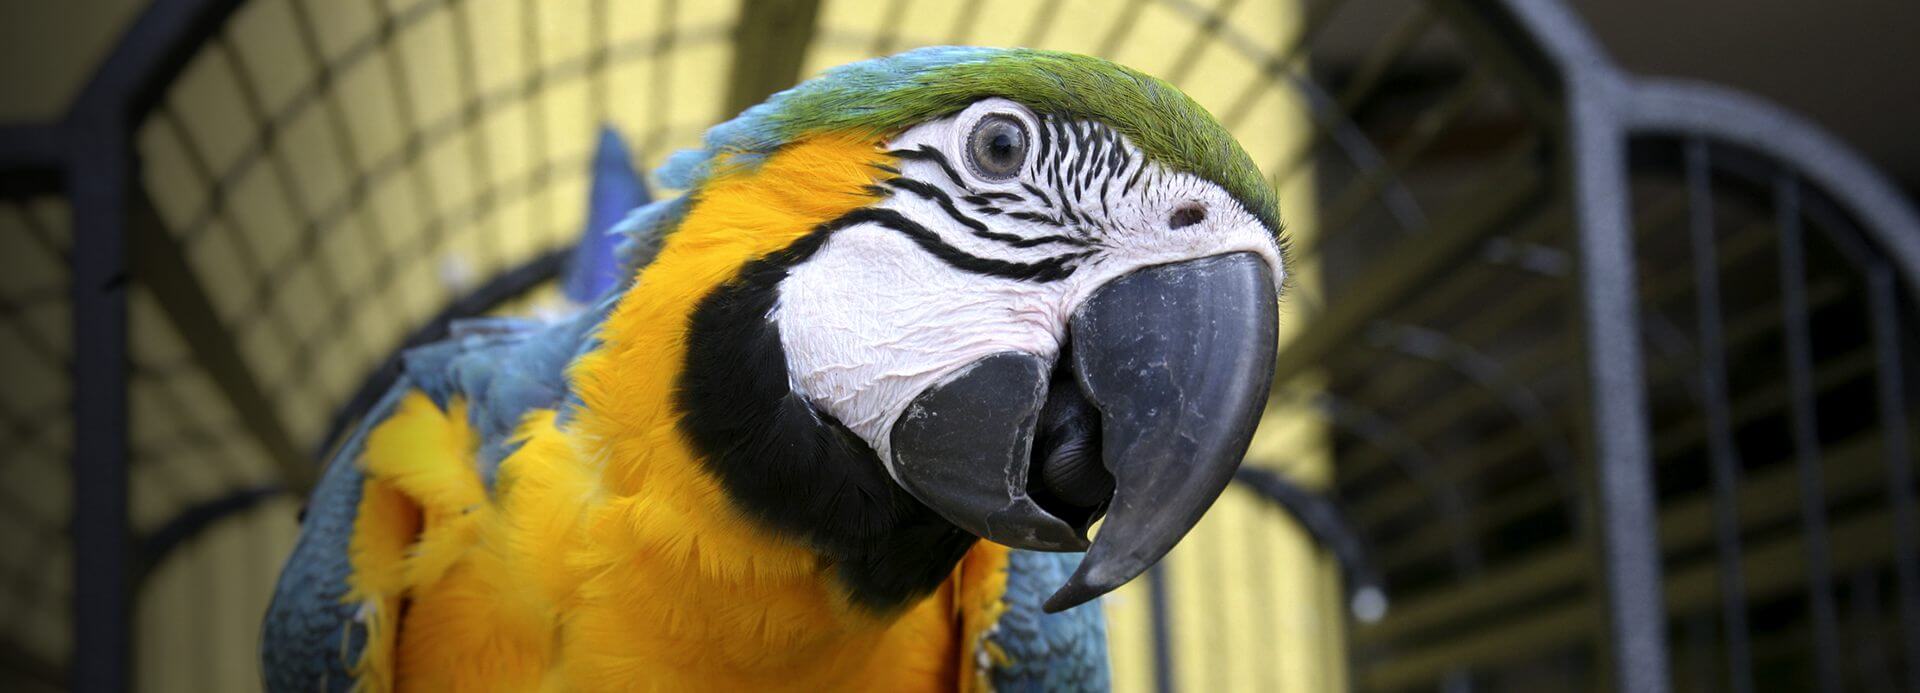 Amazon.com: Birds: Pet Supplies: Cages & Accessories, Toys ...